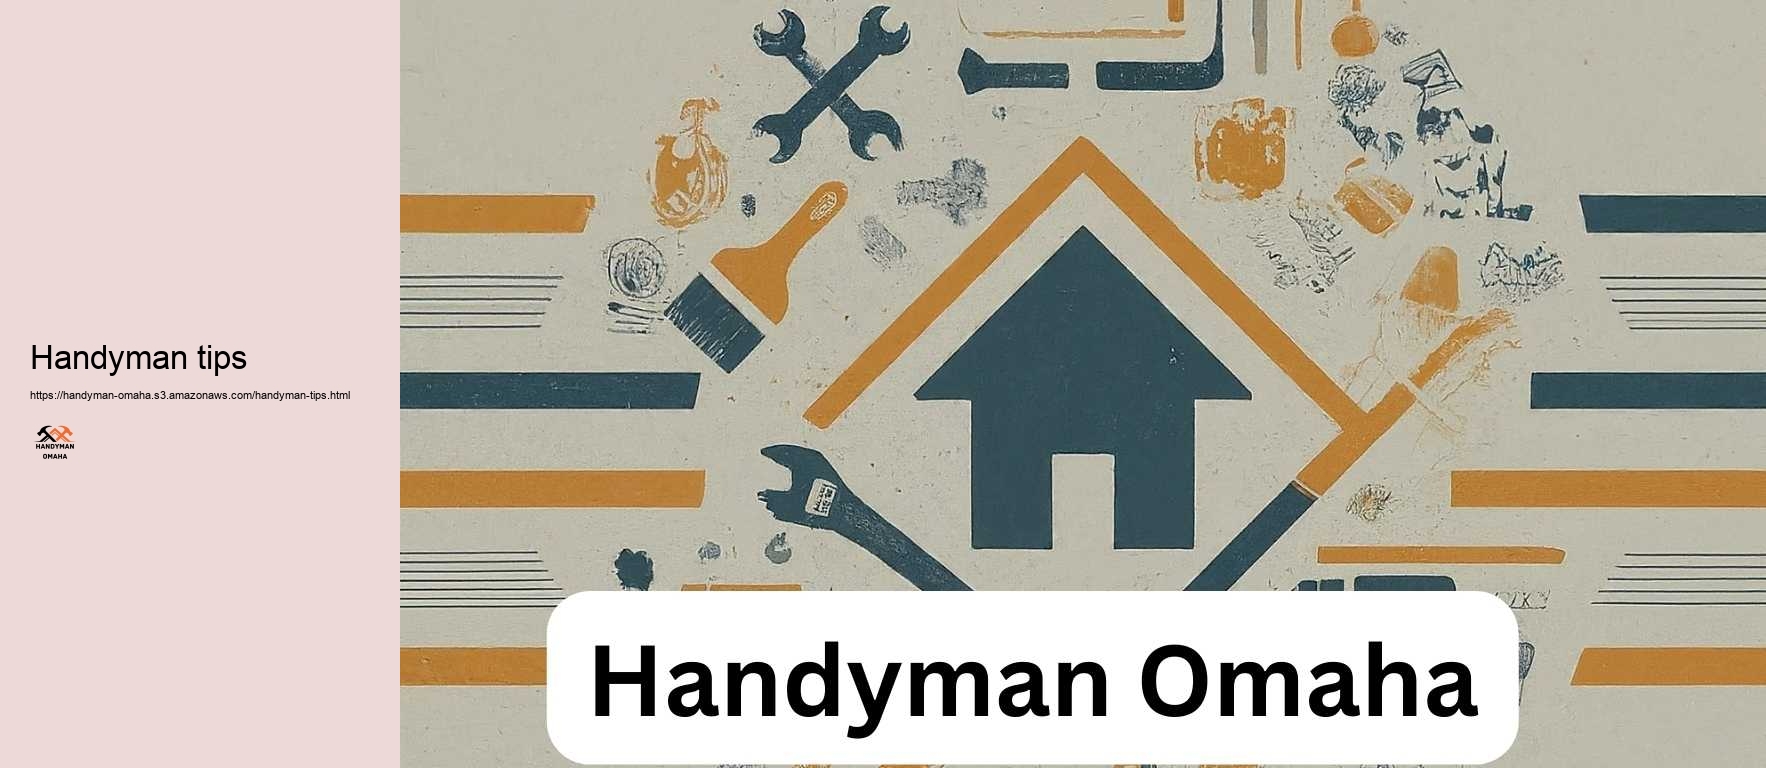 Handyman tips